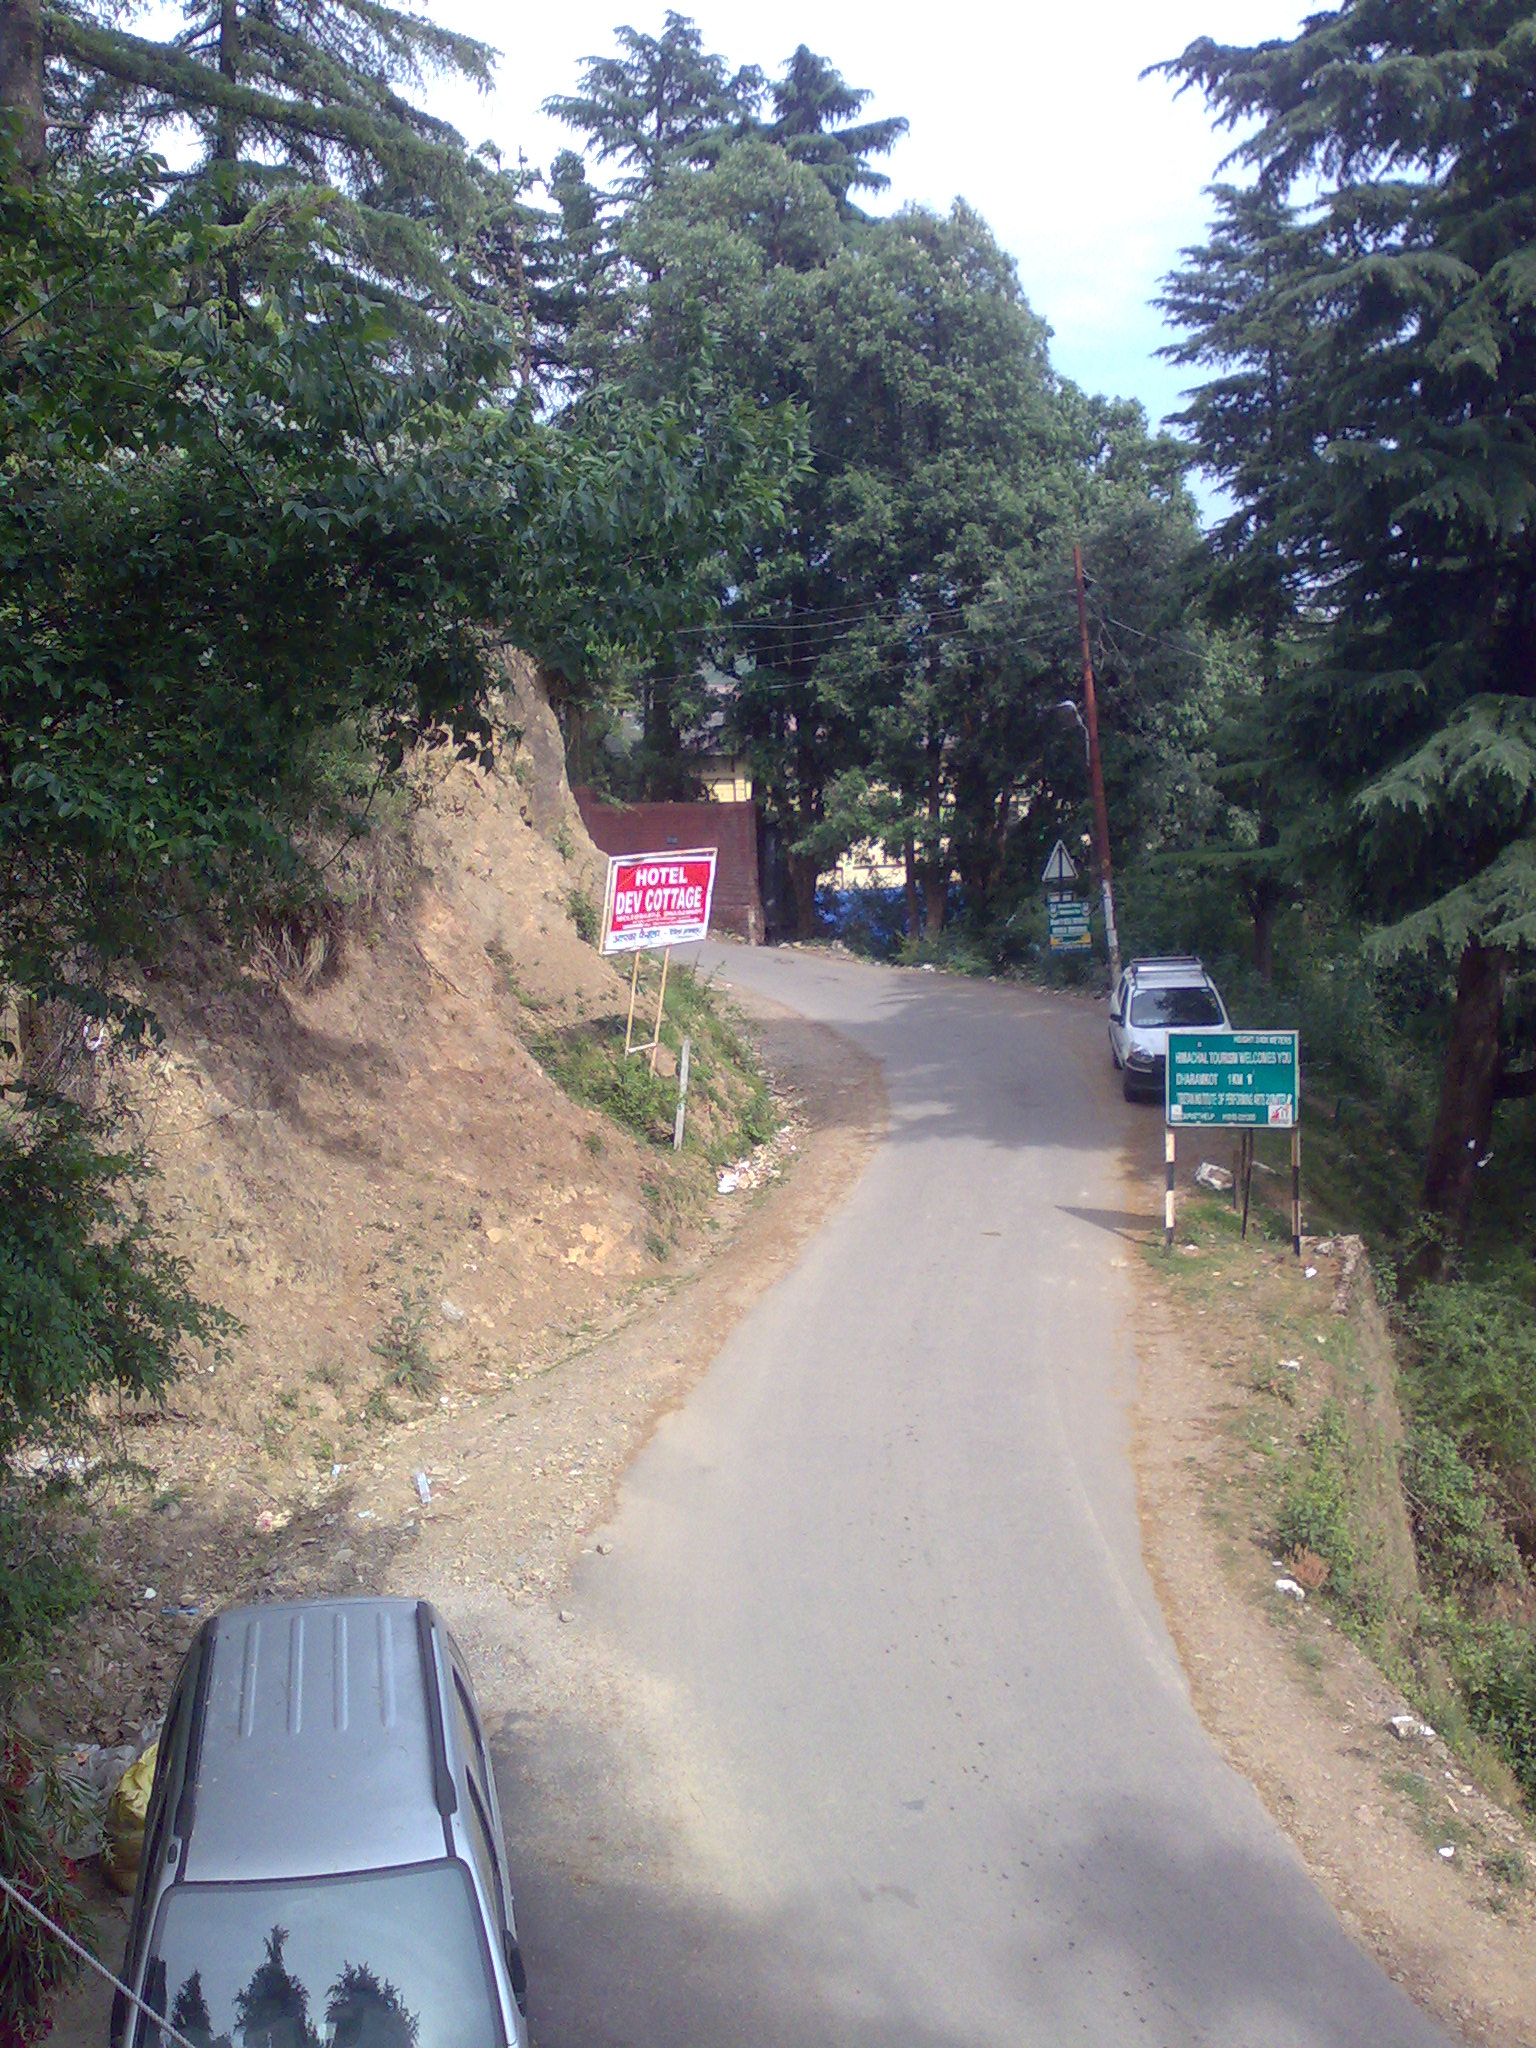 The winding roads, Macleodgang, Himachal Pradesh, India